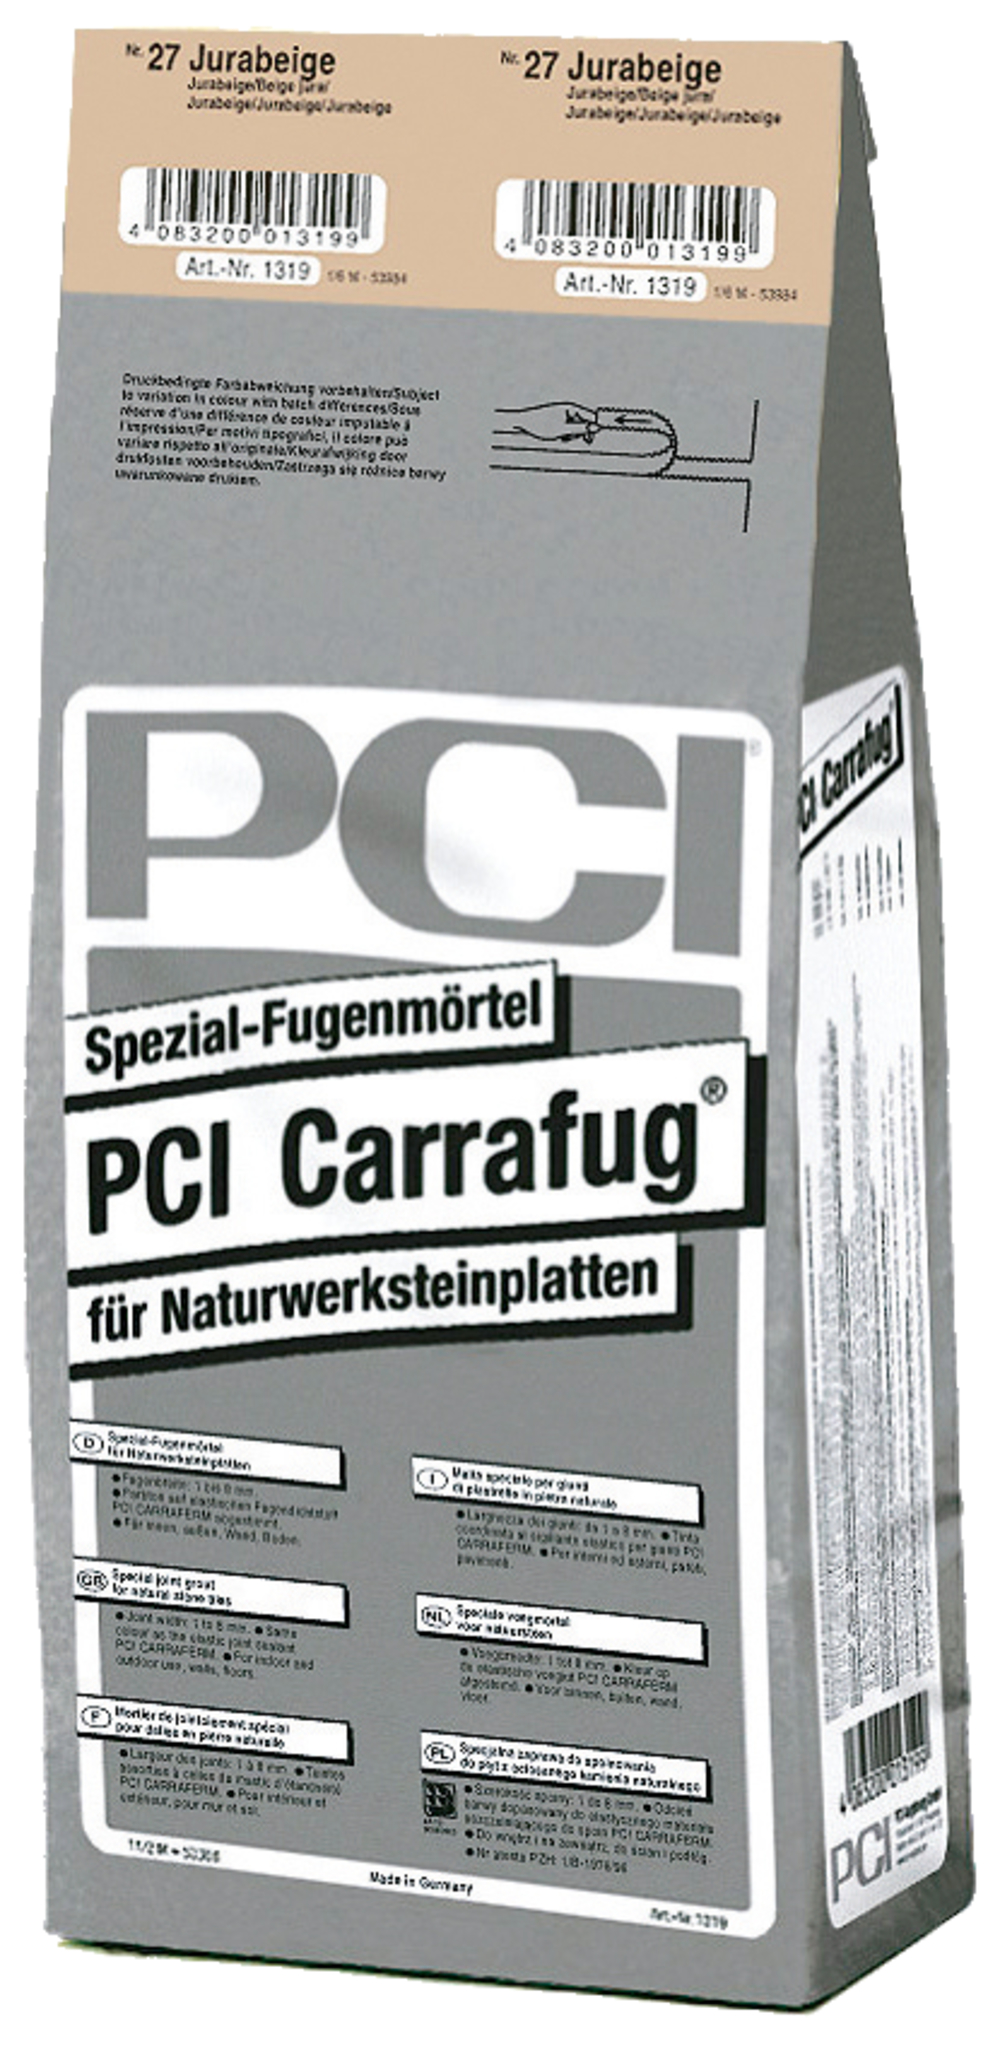 ZL OST PCI Carrafug jurabeige Nr.27 5kg Spezial-Fugenmörtel